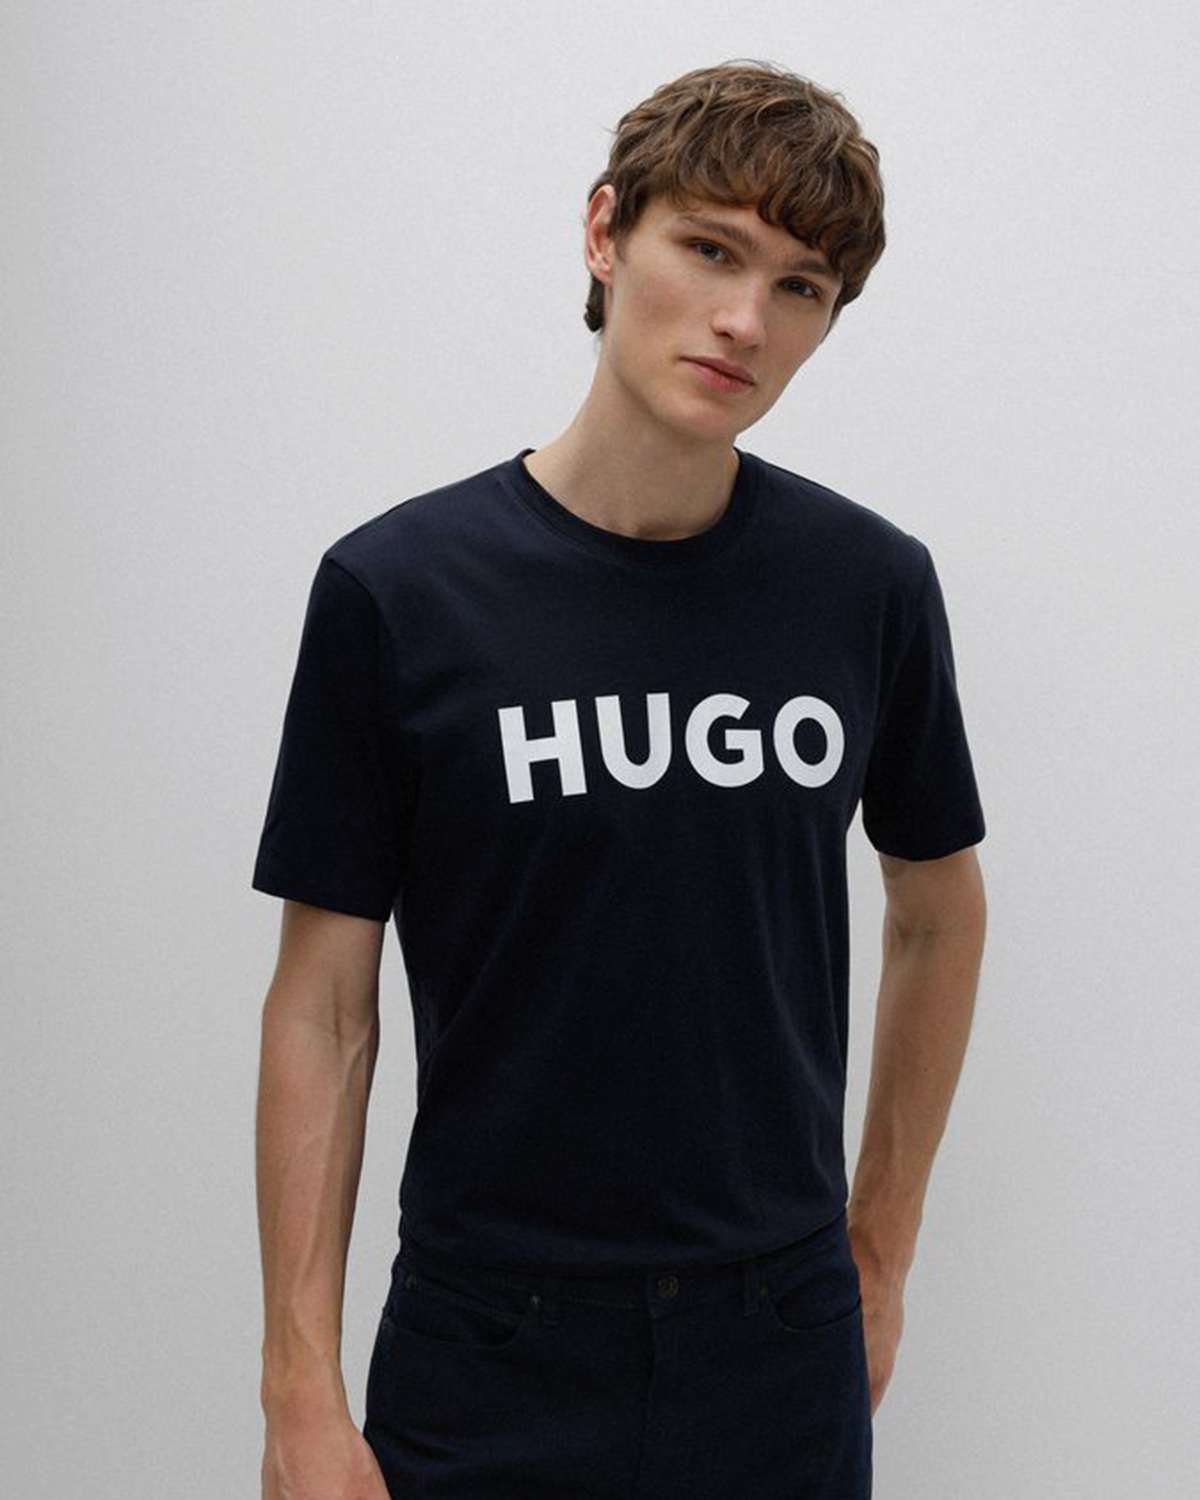 Hugo размеры. Футболка Hugo. Футболка Hugo Dulivio. Hugo футболка мужская. Hugo футболка коричневая.